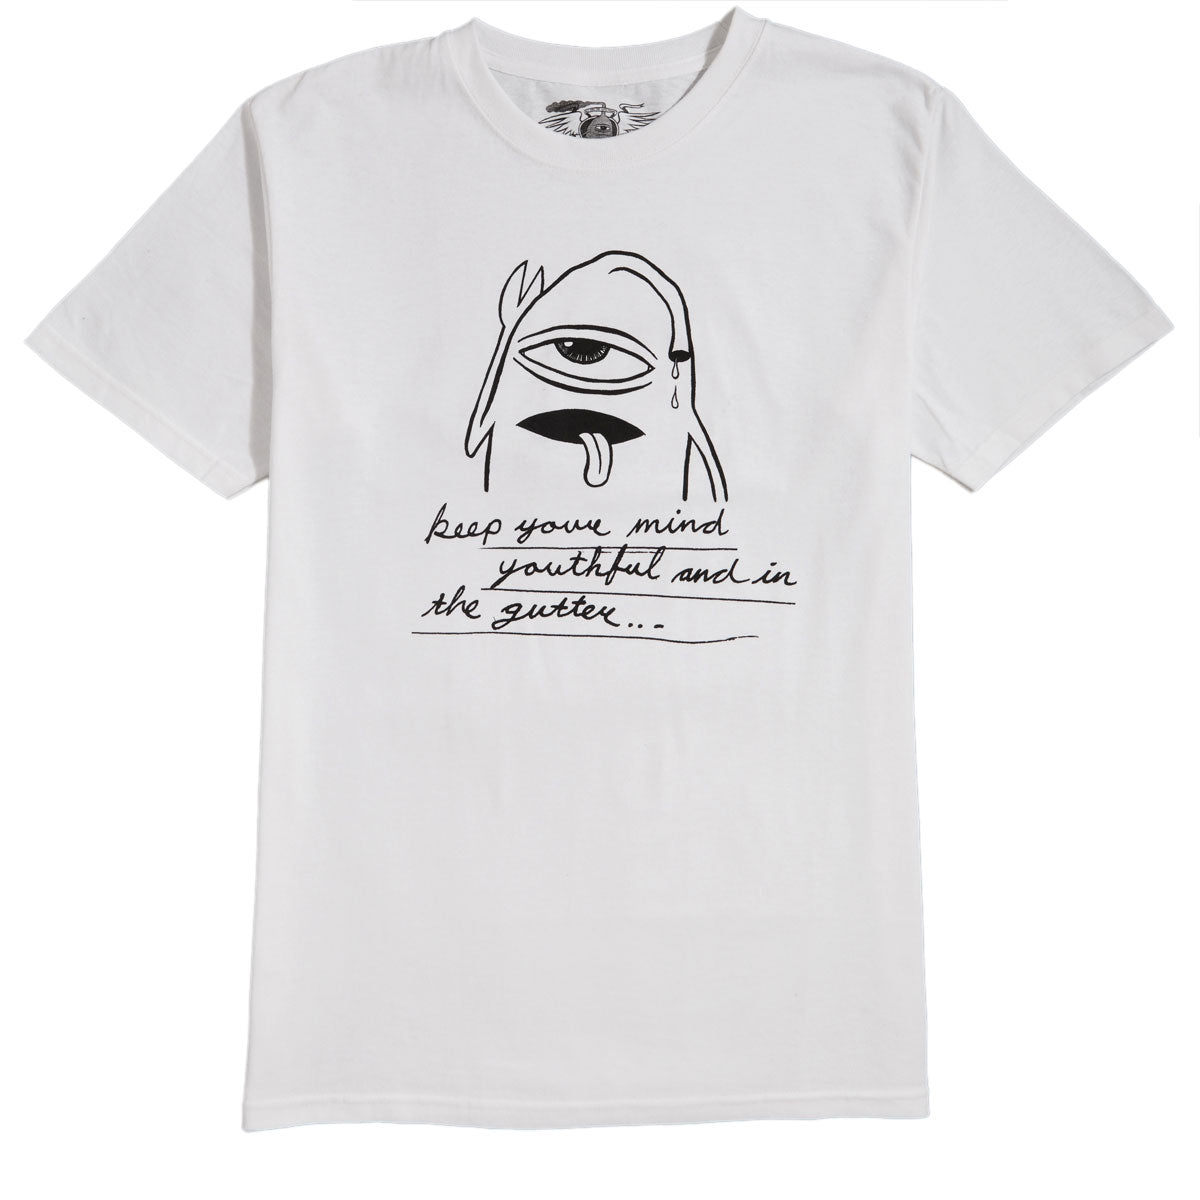 Toy Machine Youthful T-Shirt - White image 1